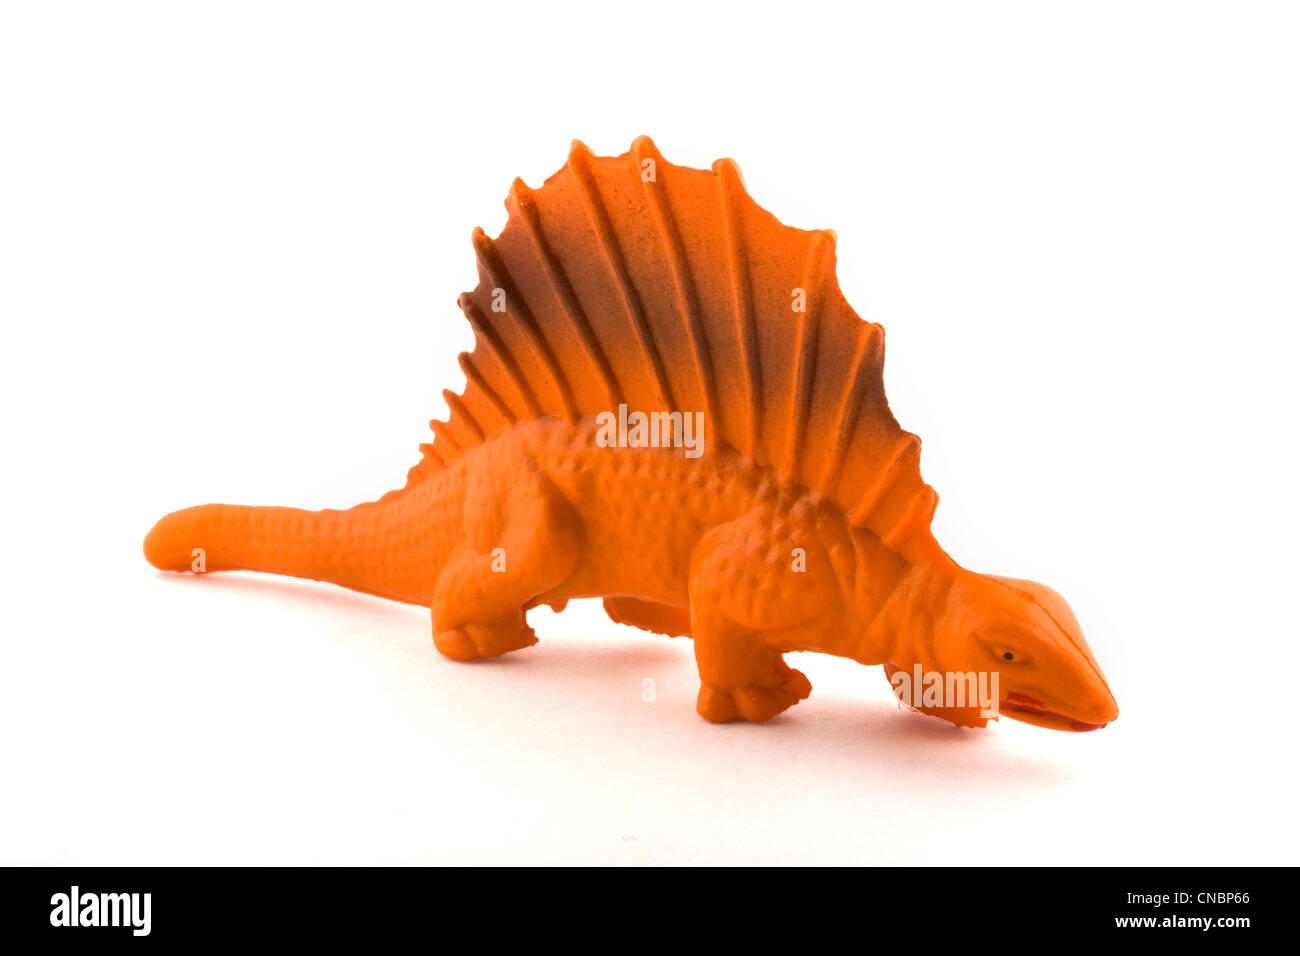 Toy plastic dinosaur over white Stock Photo